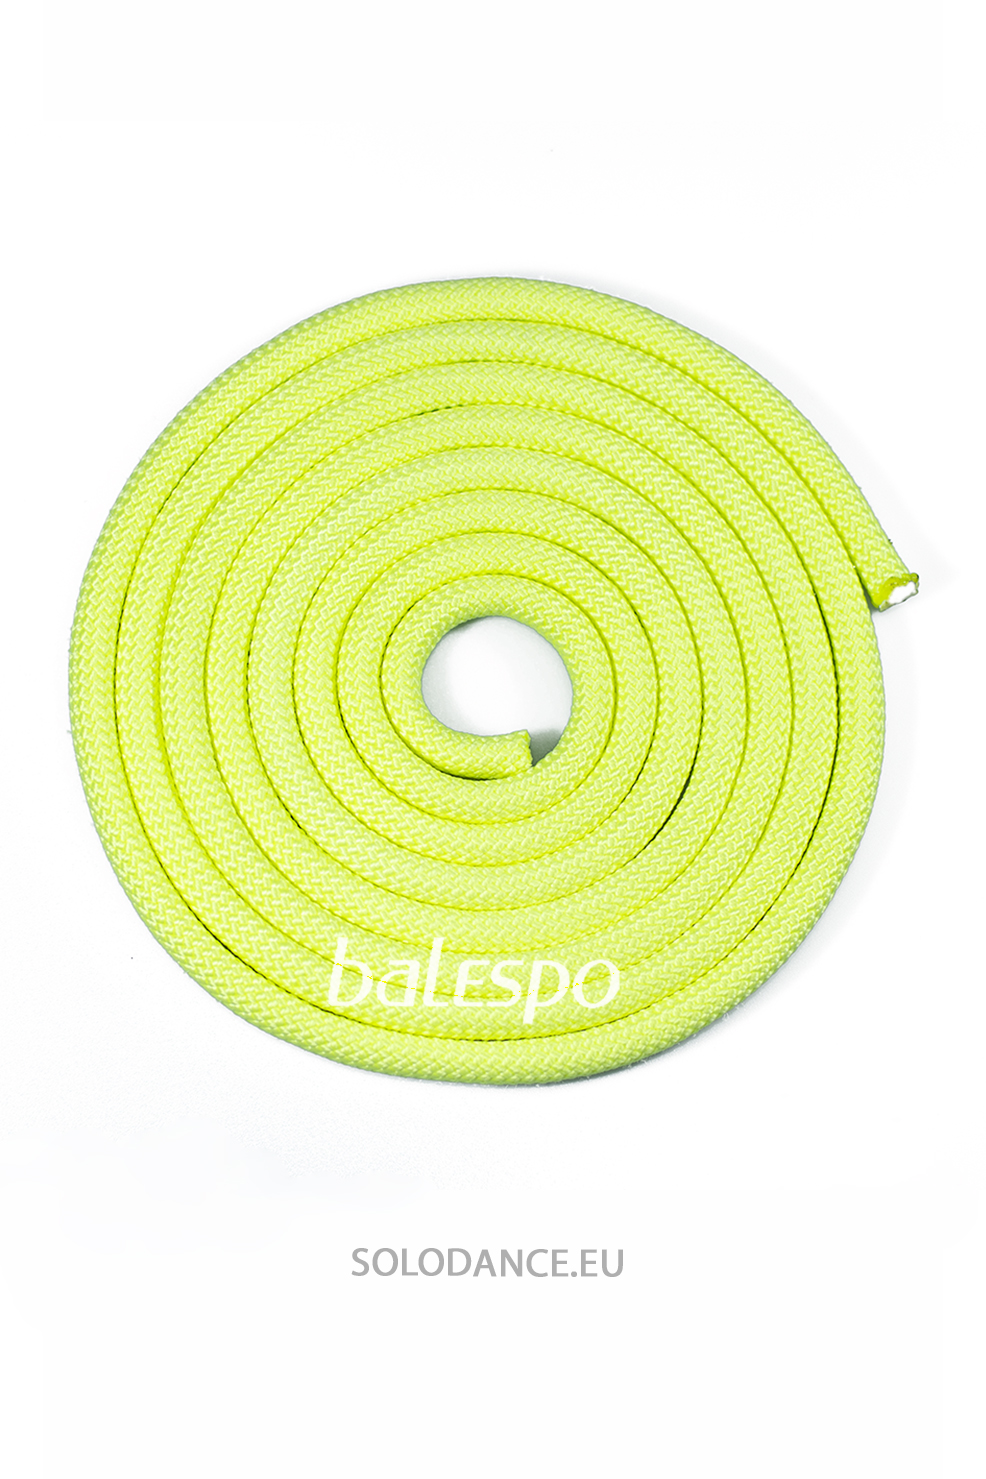 Gymnastic rope BALESPO neon yellow 3 m